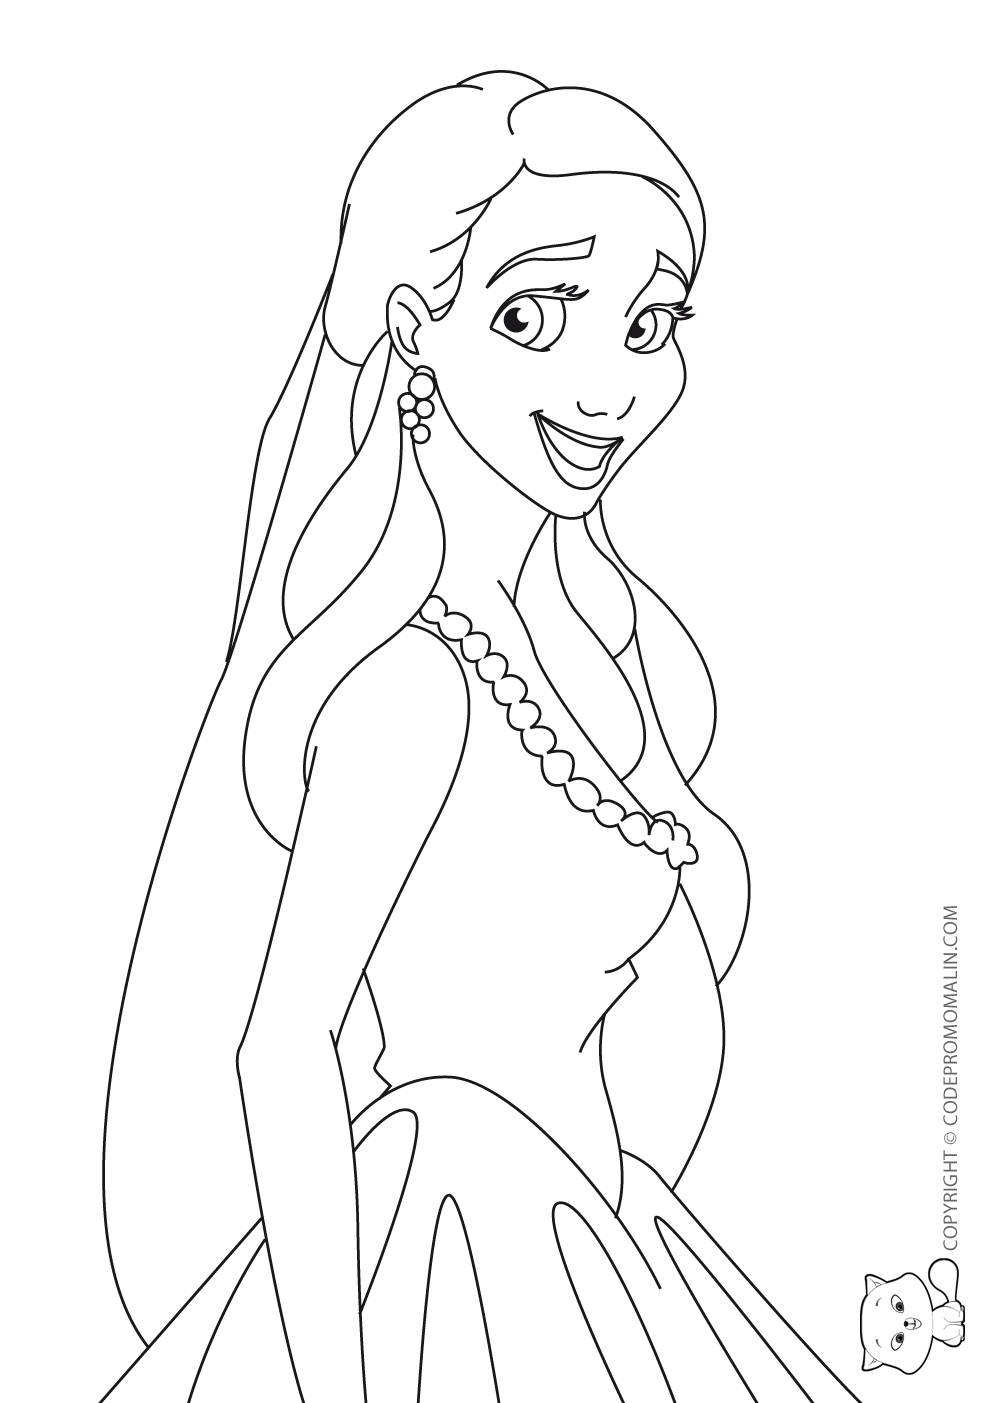 Coloriage princesse gratuit - dessin a imprimer #182